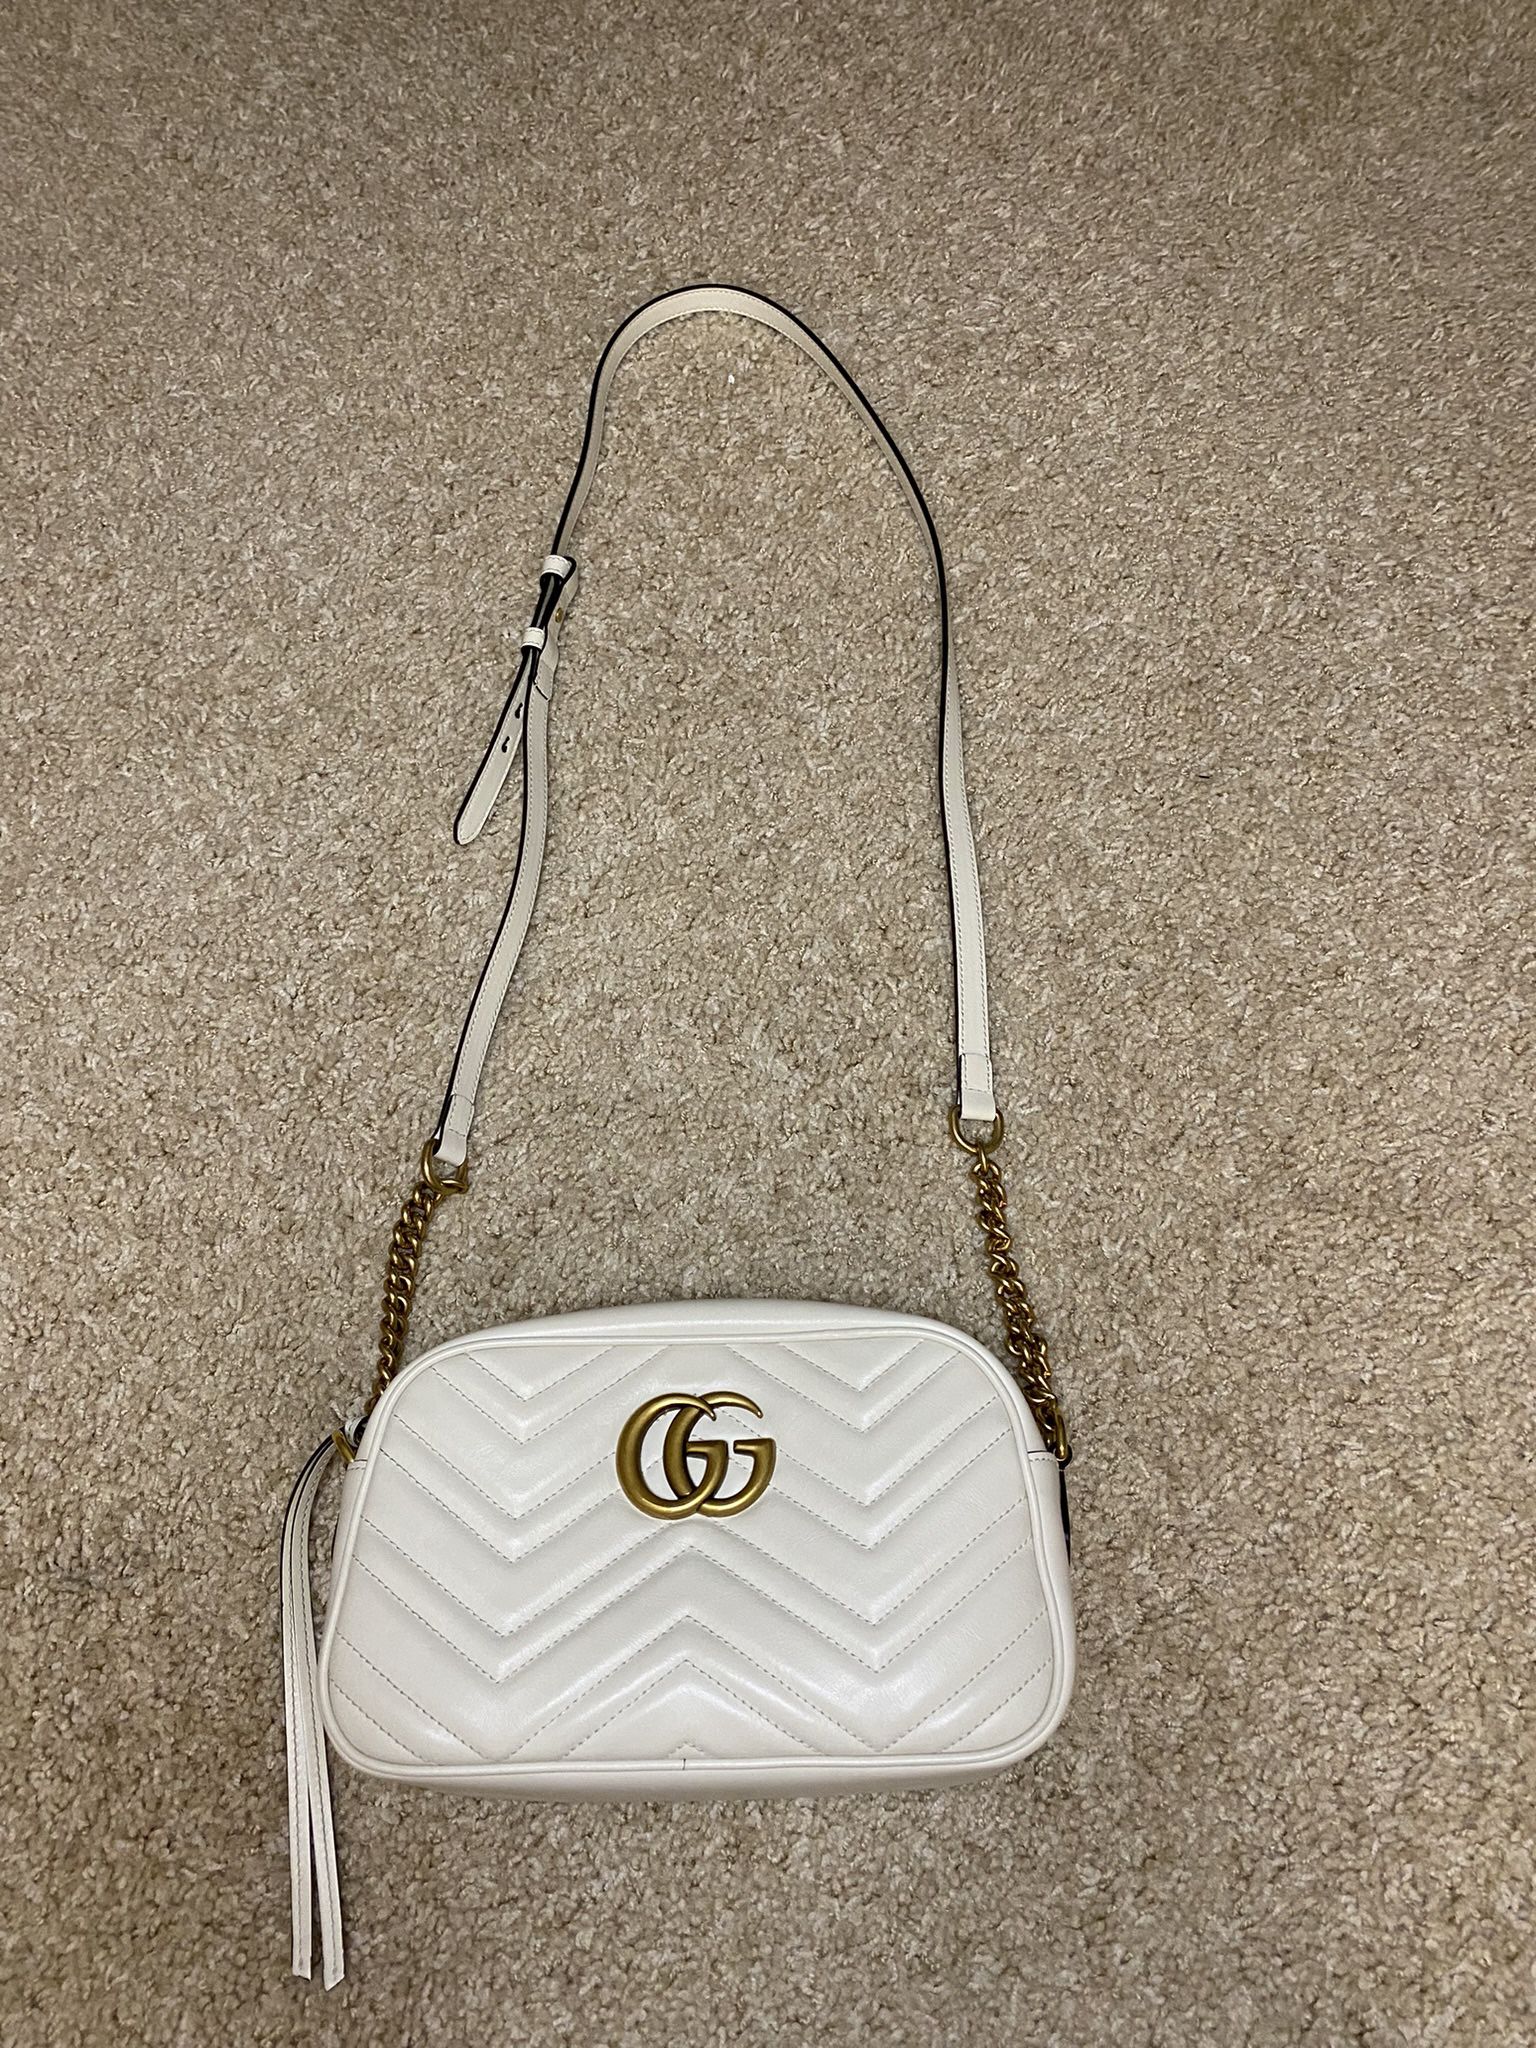 Authentic Gucci Marmont GG Camera Bag 